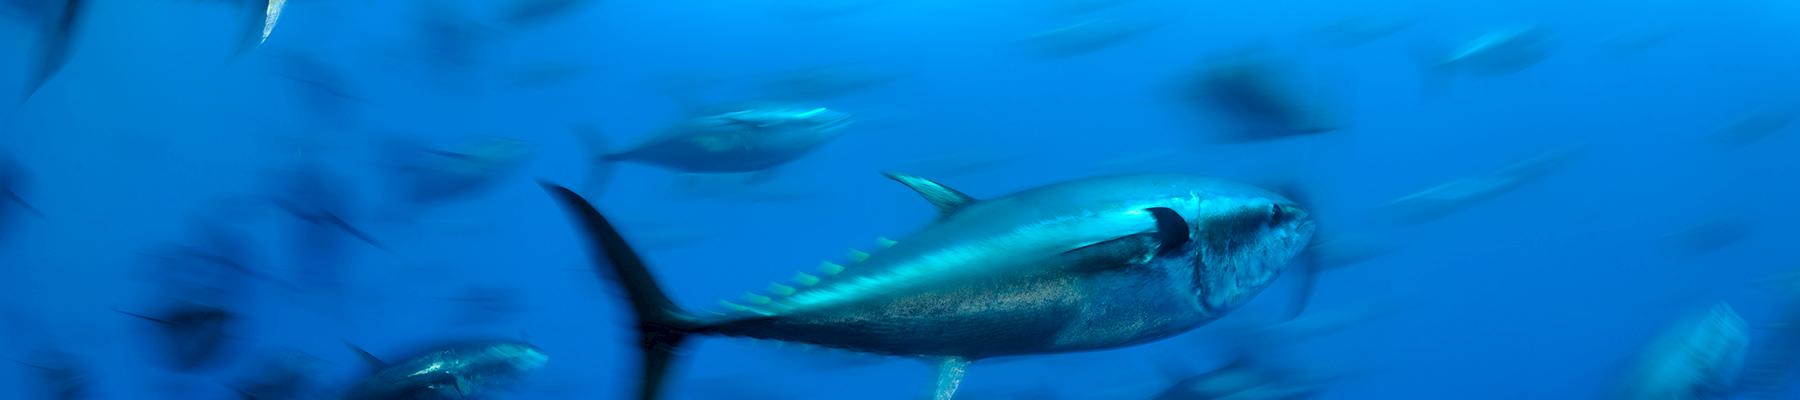 Atlantic bluefin tuna Thunnus thynnus © Wild Wonders of Europe / Zankl / WWF